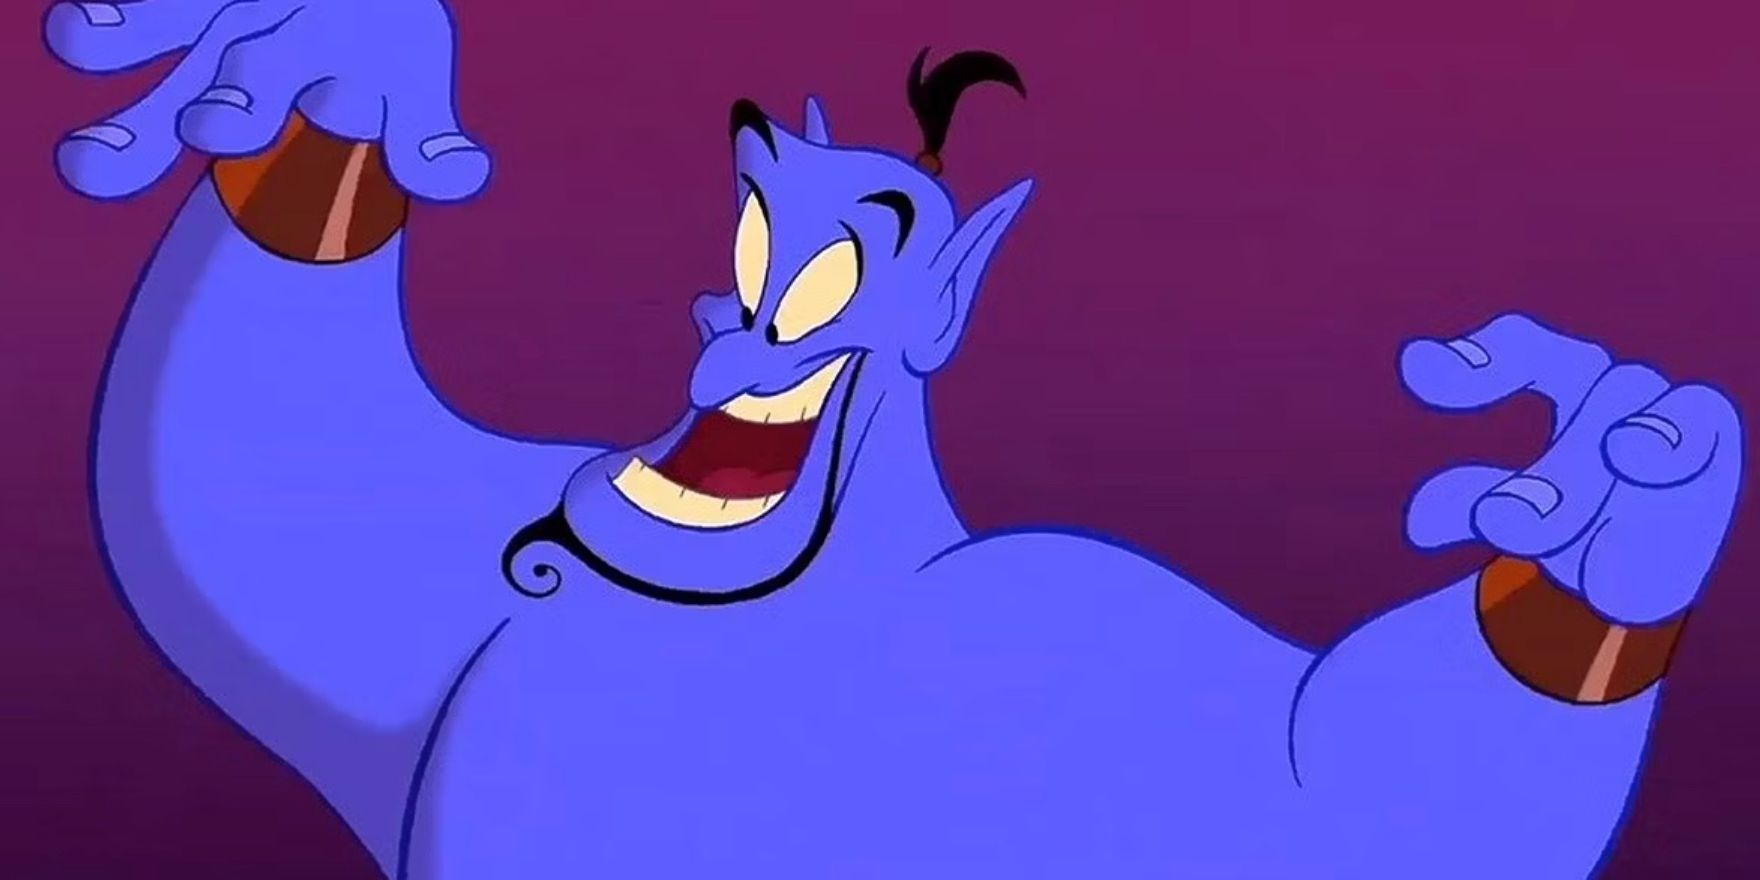 Robin Williams as Genie grinning in Aladdin